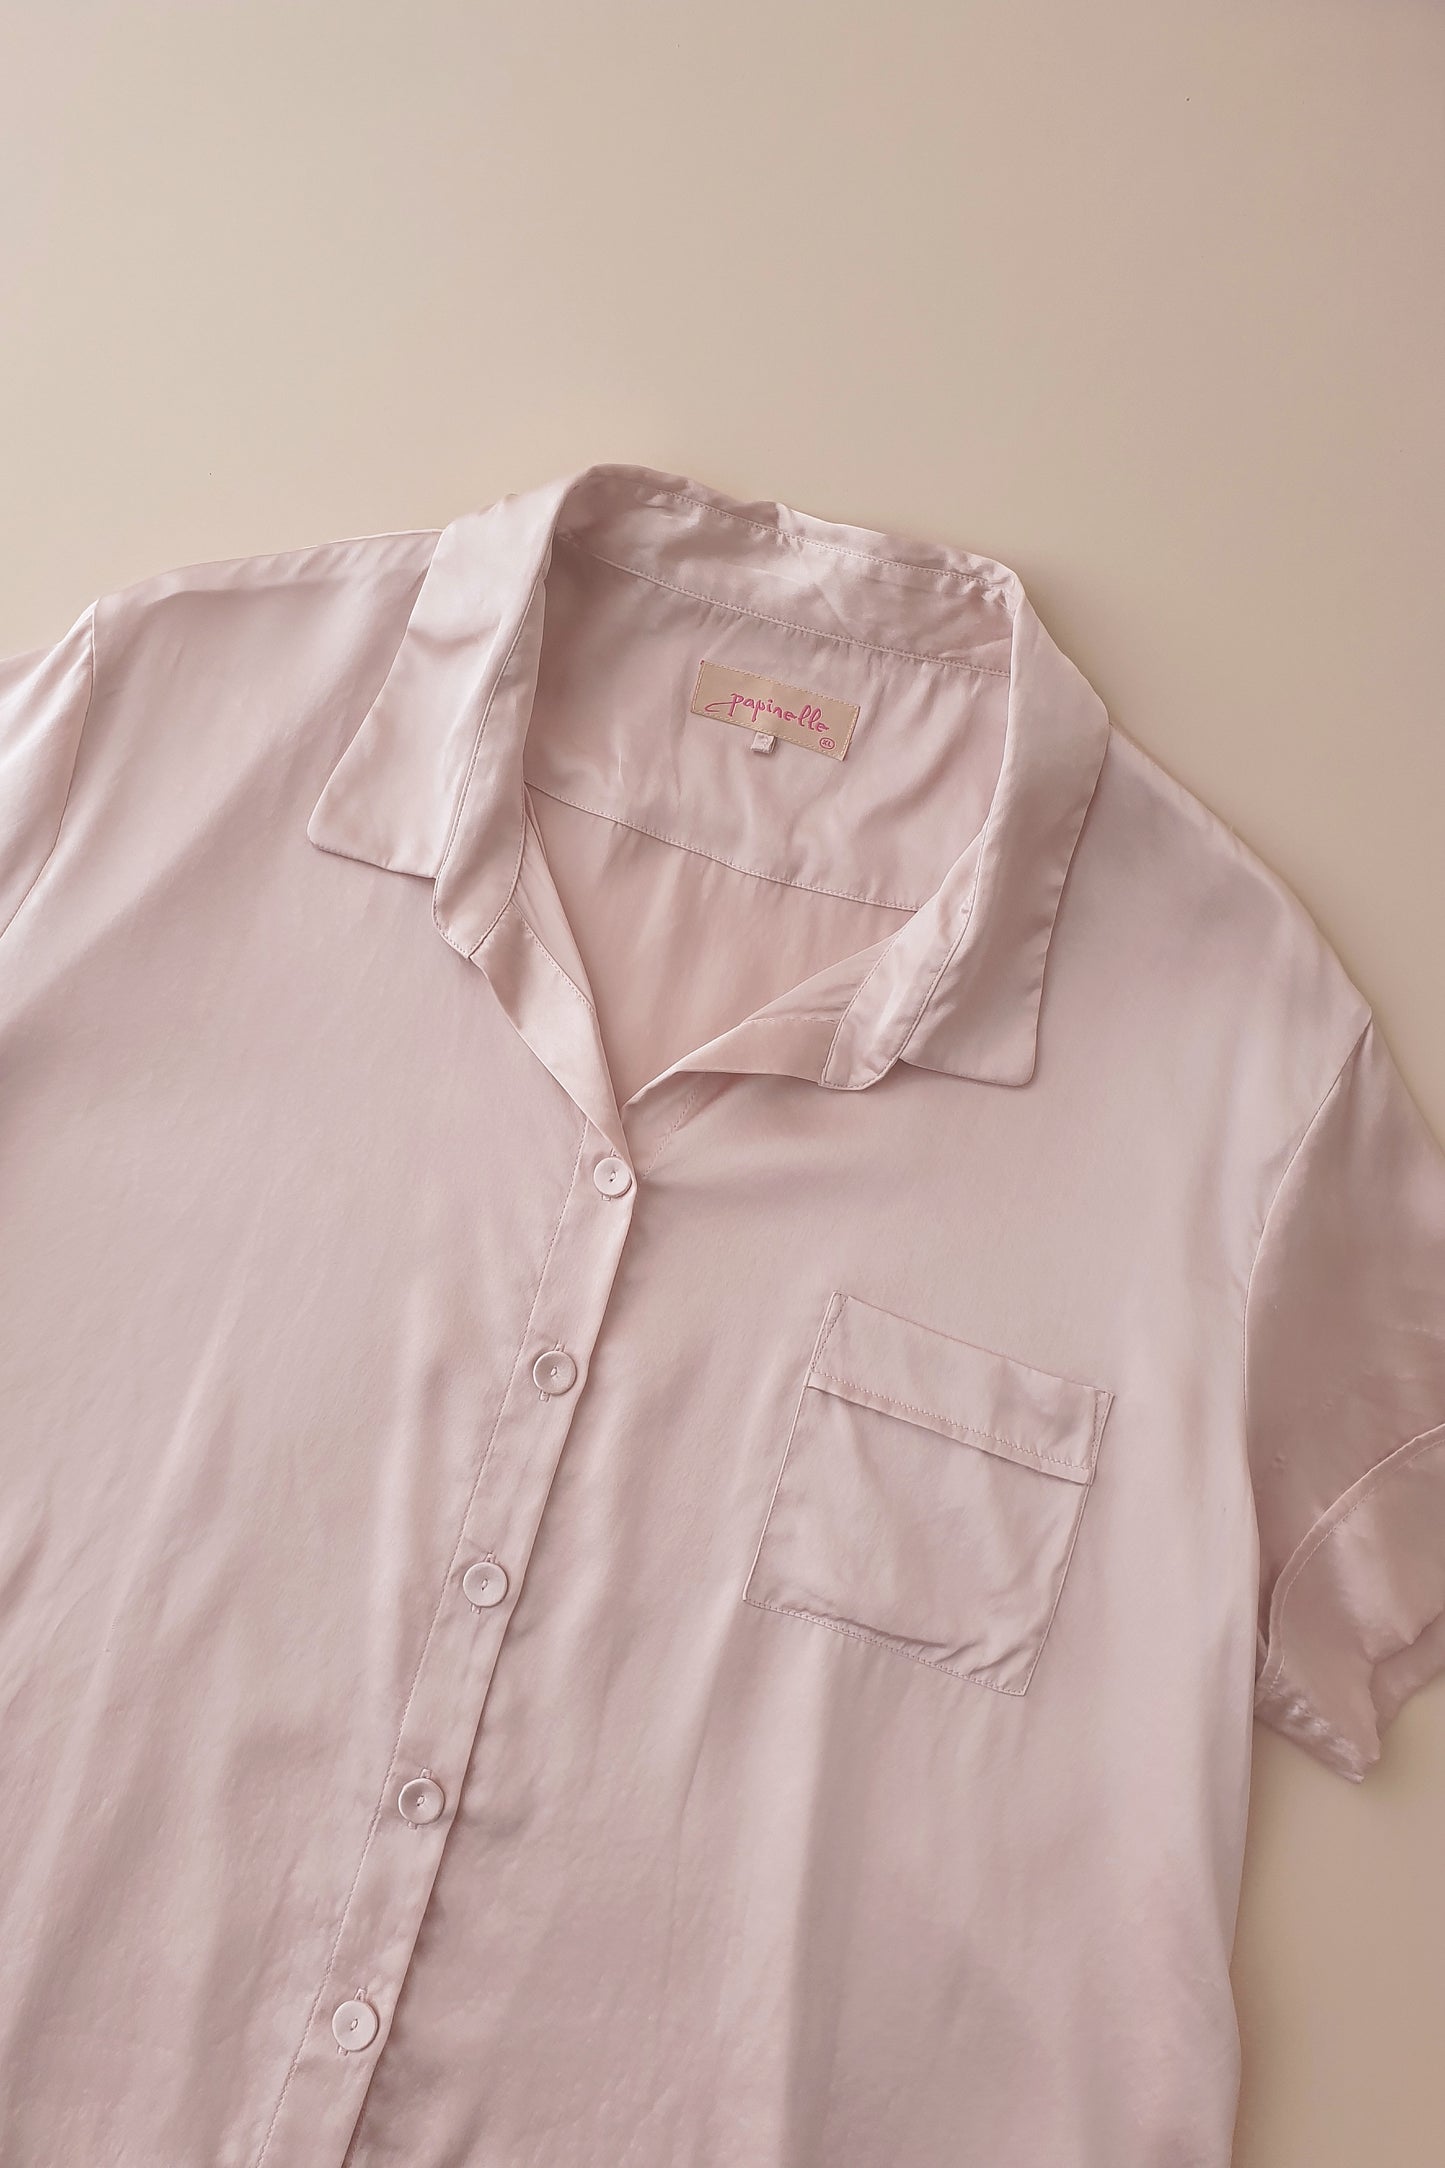 Papinelle pink silk 'Audrey' pyjamas Size XL